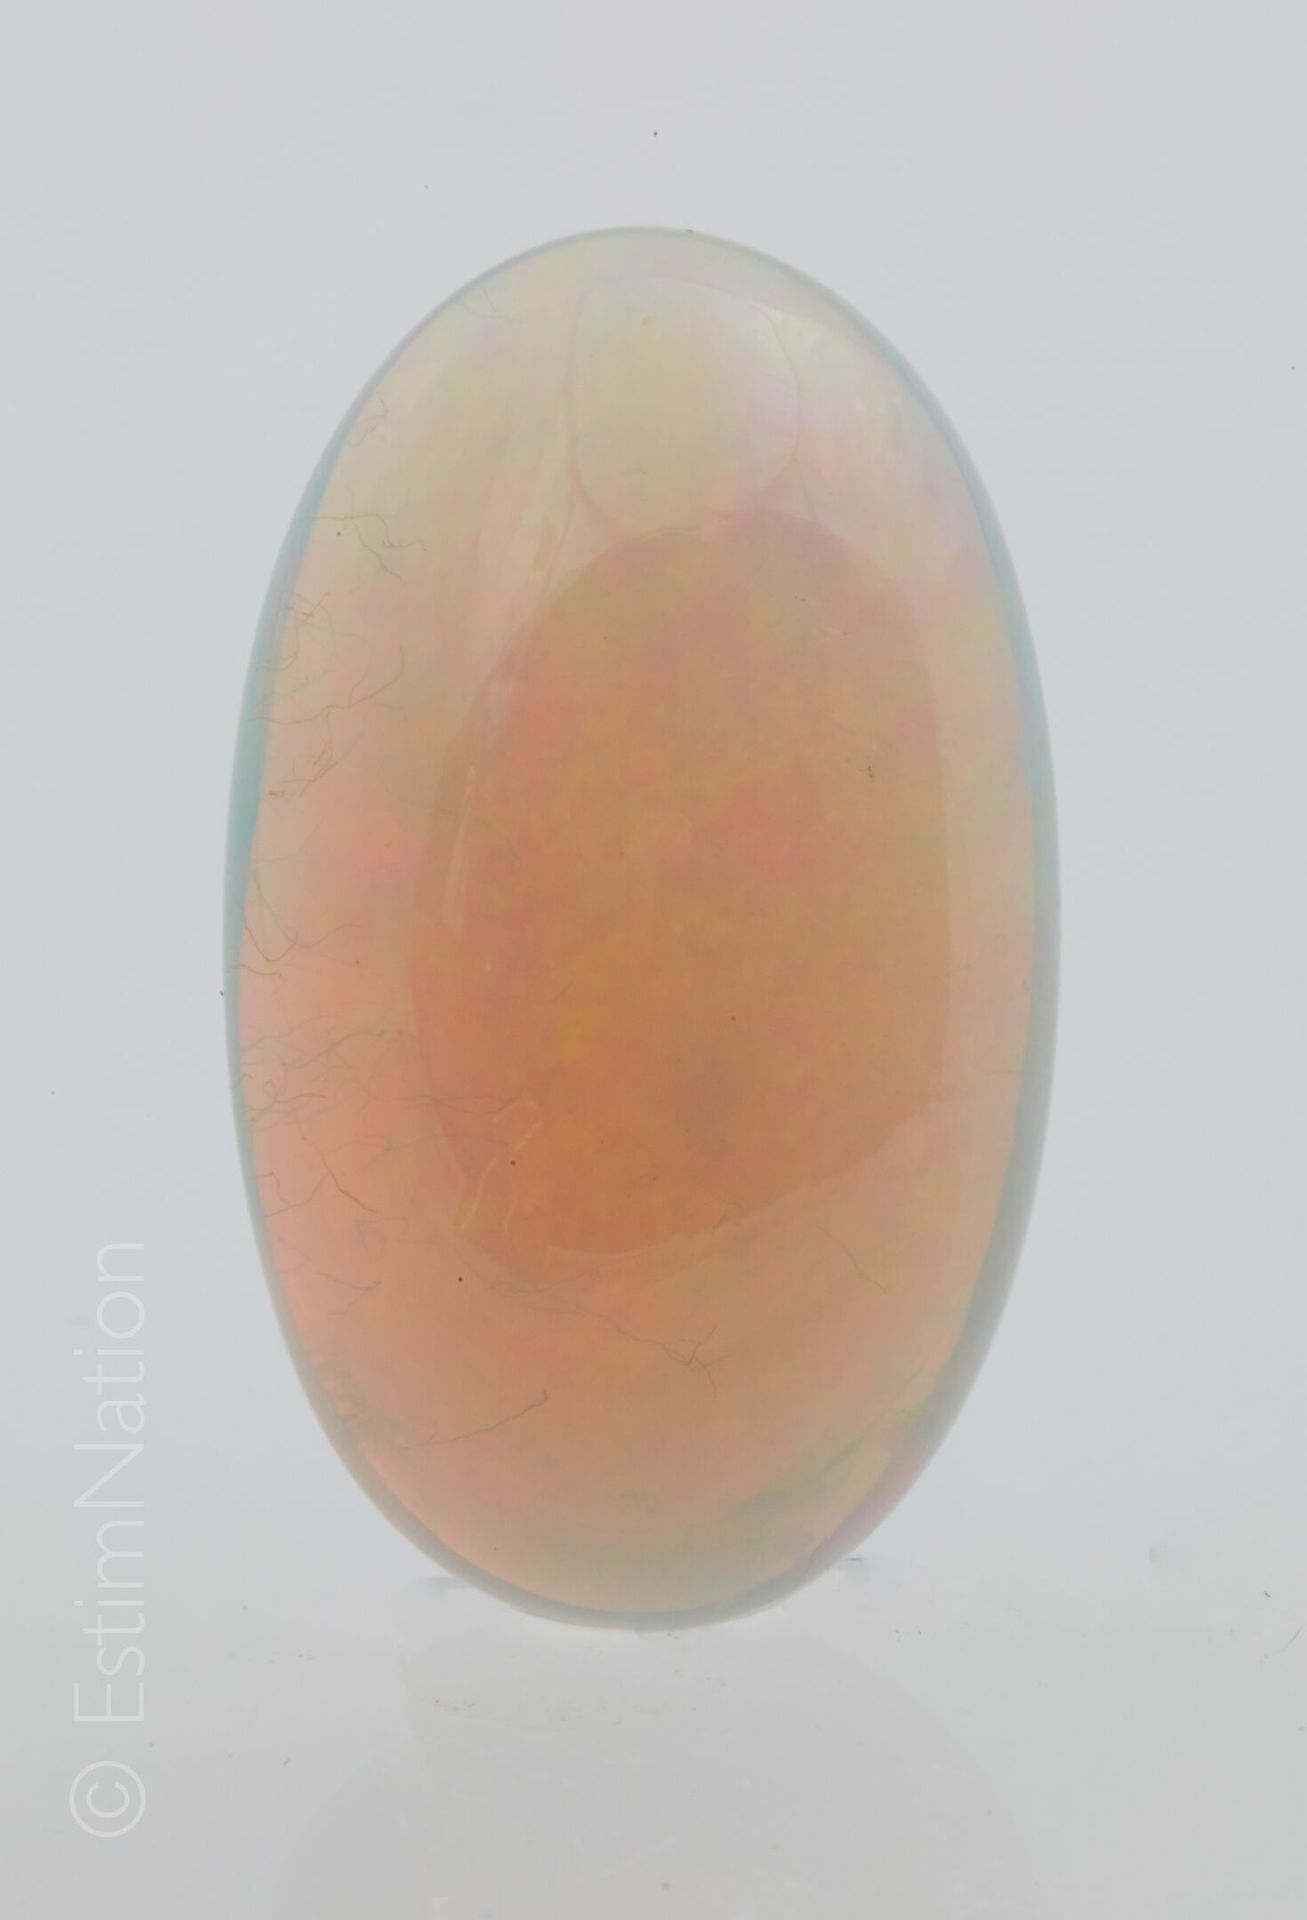 OPALE WELO Opale Welo in cabochon ovale. Origine: Etiopia

Dimensioni: 17,40 x 1&hellip;